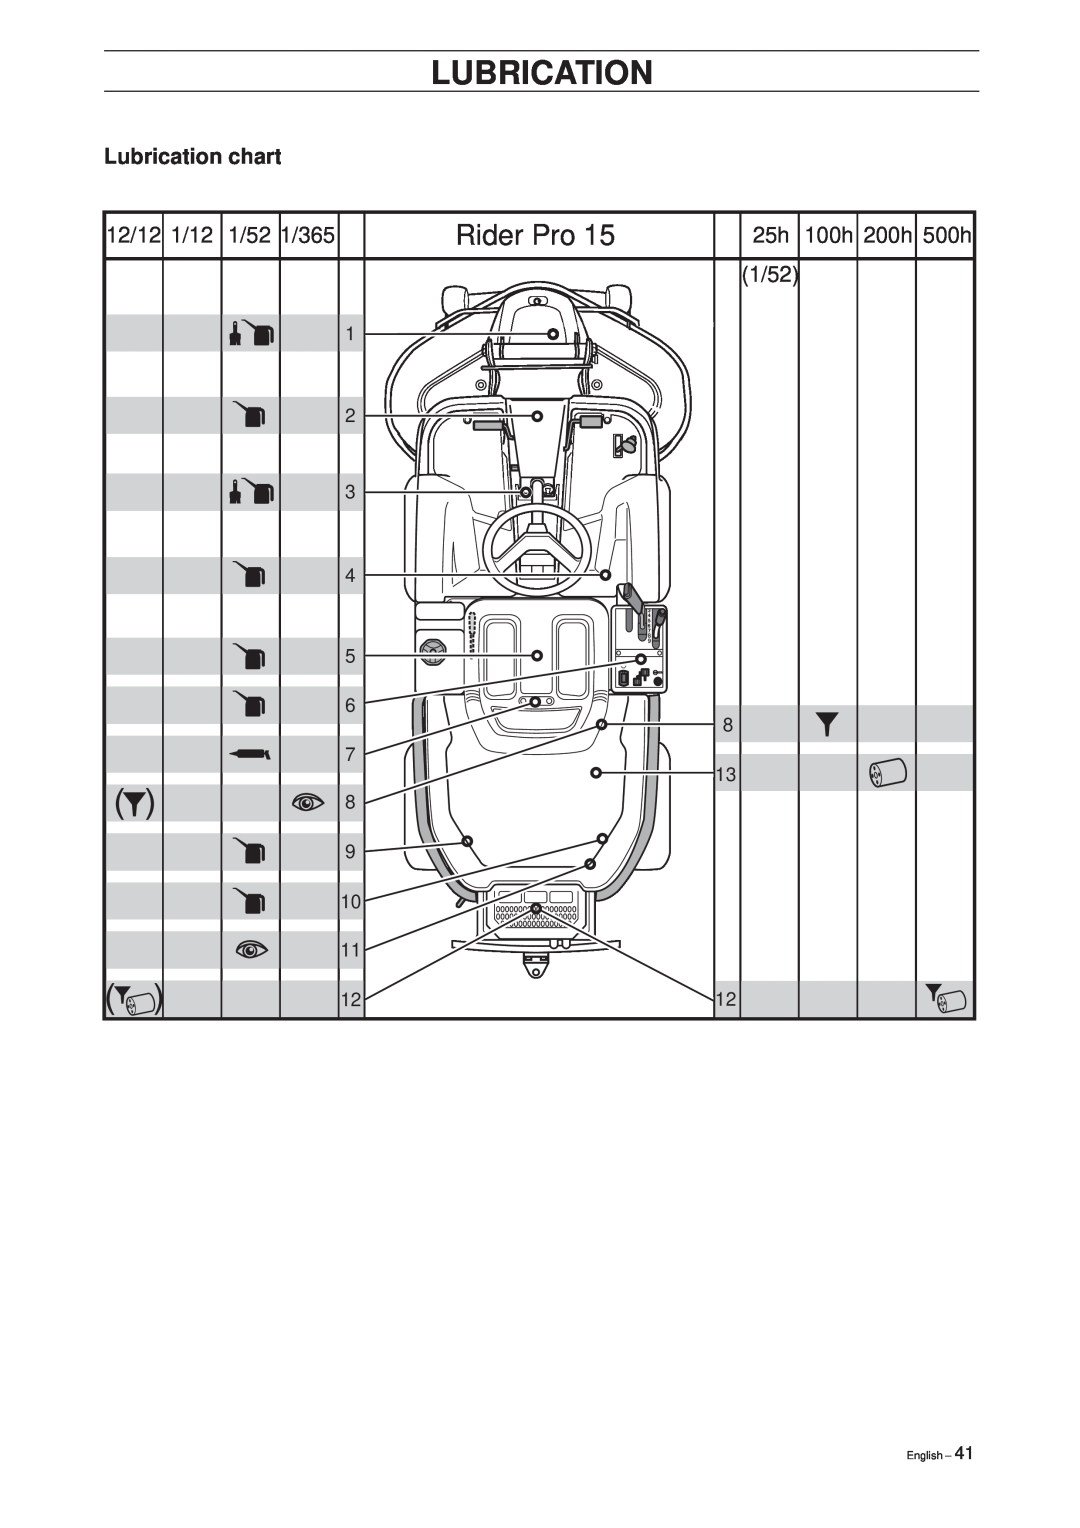 Husqvarna Pro 15 manual Lubrication chart, 12/12 1/12, 1/52 1/365, 100h 200h 500h, Rider Pro, English 